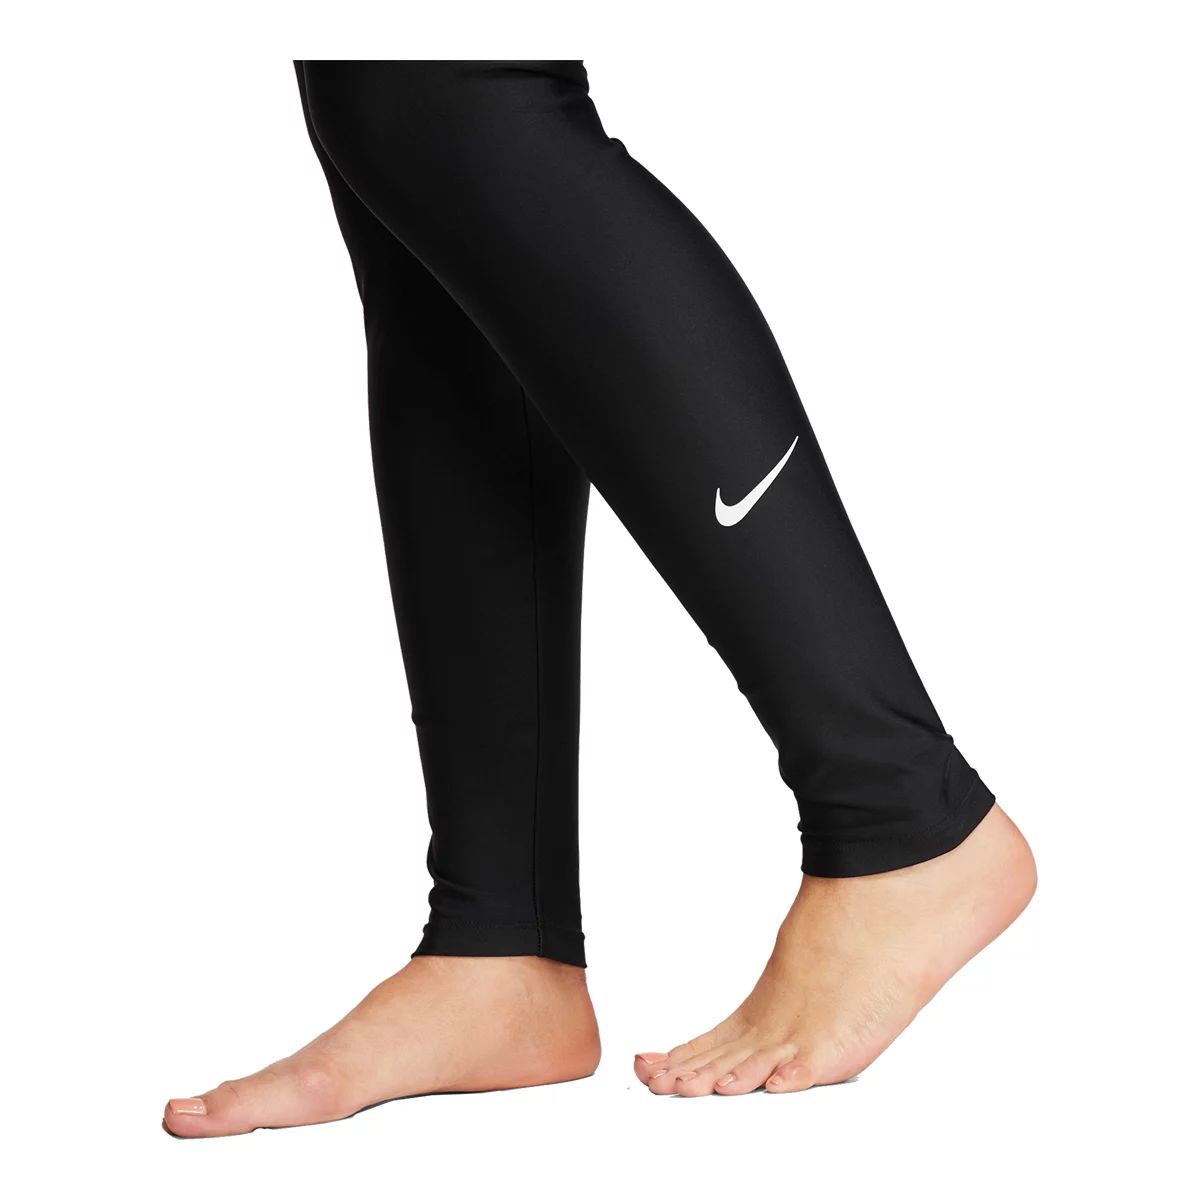 Nike Womens Tank Top Leggings Black Size XS S Lot 2 - Shop Linda's Stuff